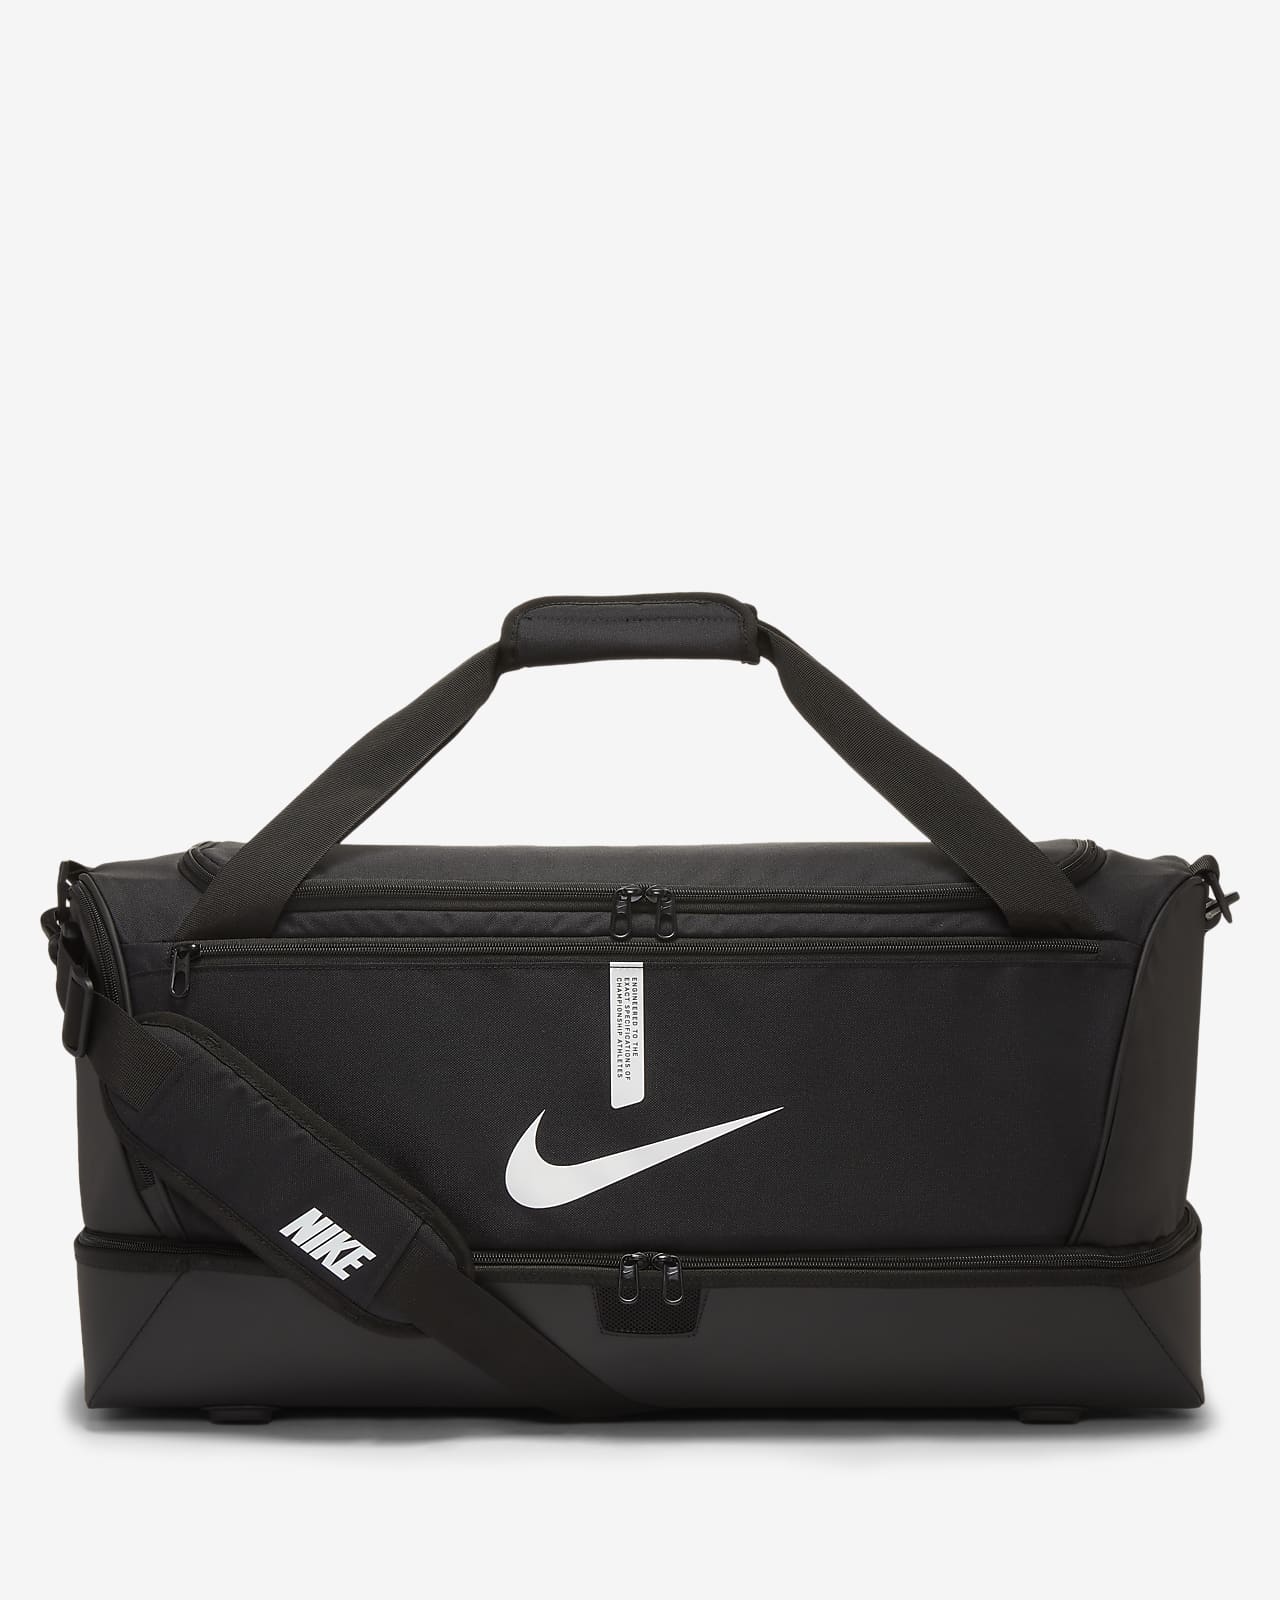 Wzmacniana torba piłkarska Nike Academy Team (duża, 59 l)